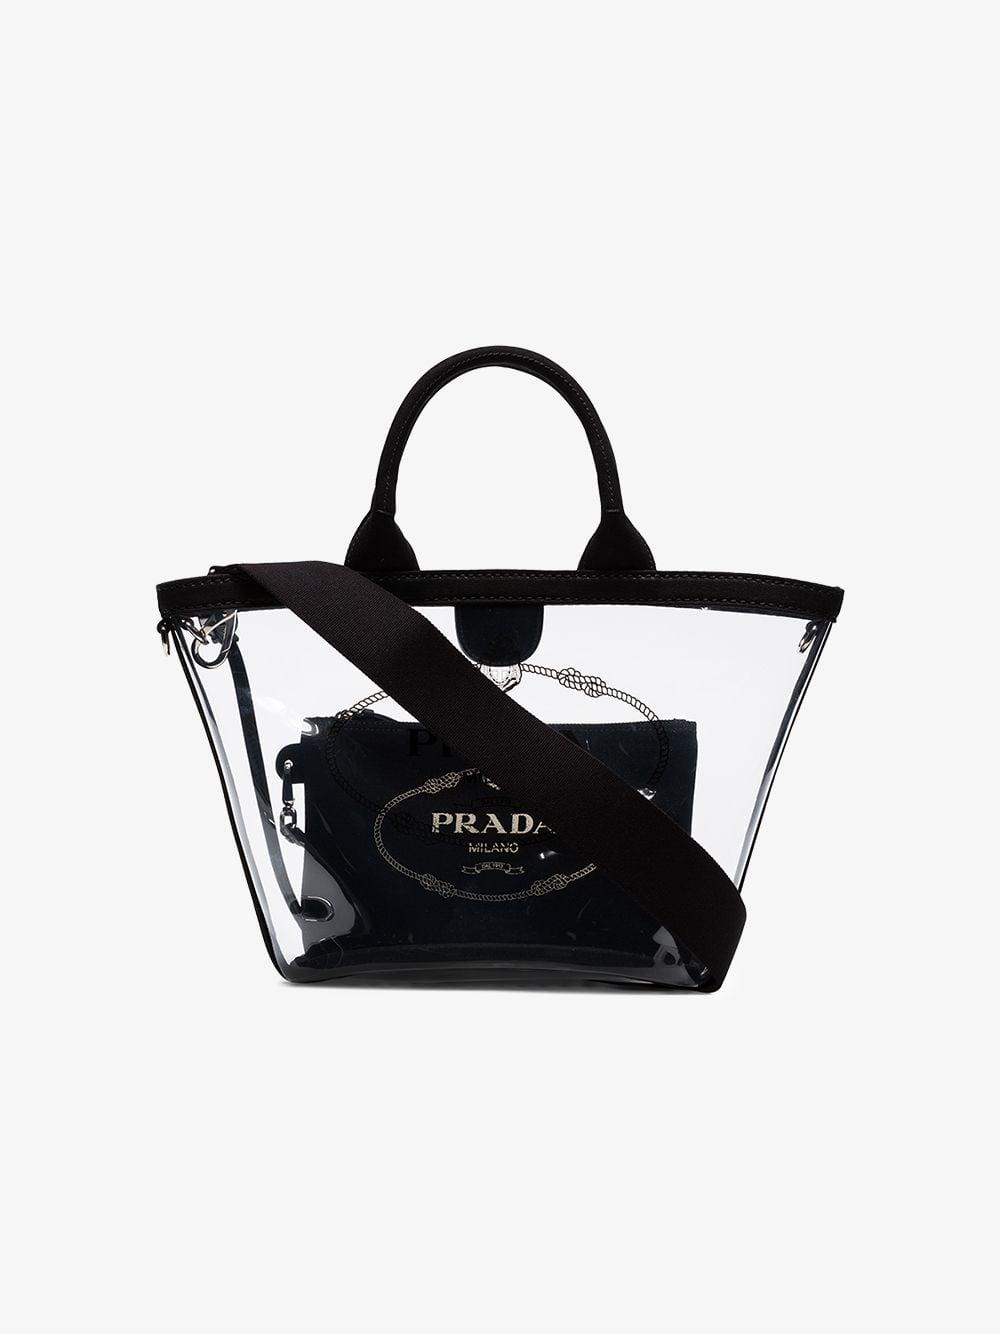 Auth PRADA Plex Fabric Handbag 1BG166 Clear Red Black Canvas Leather Handbag